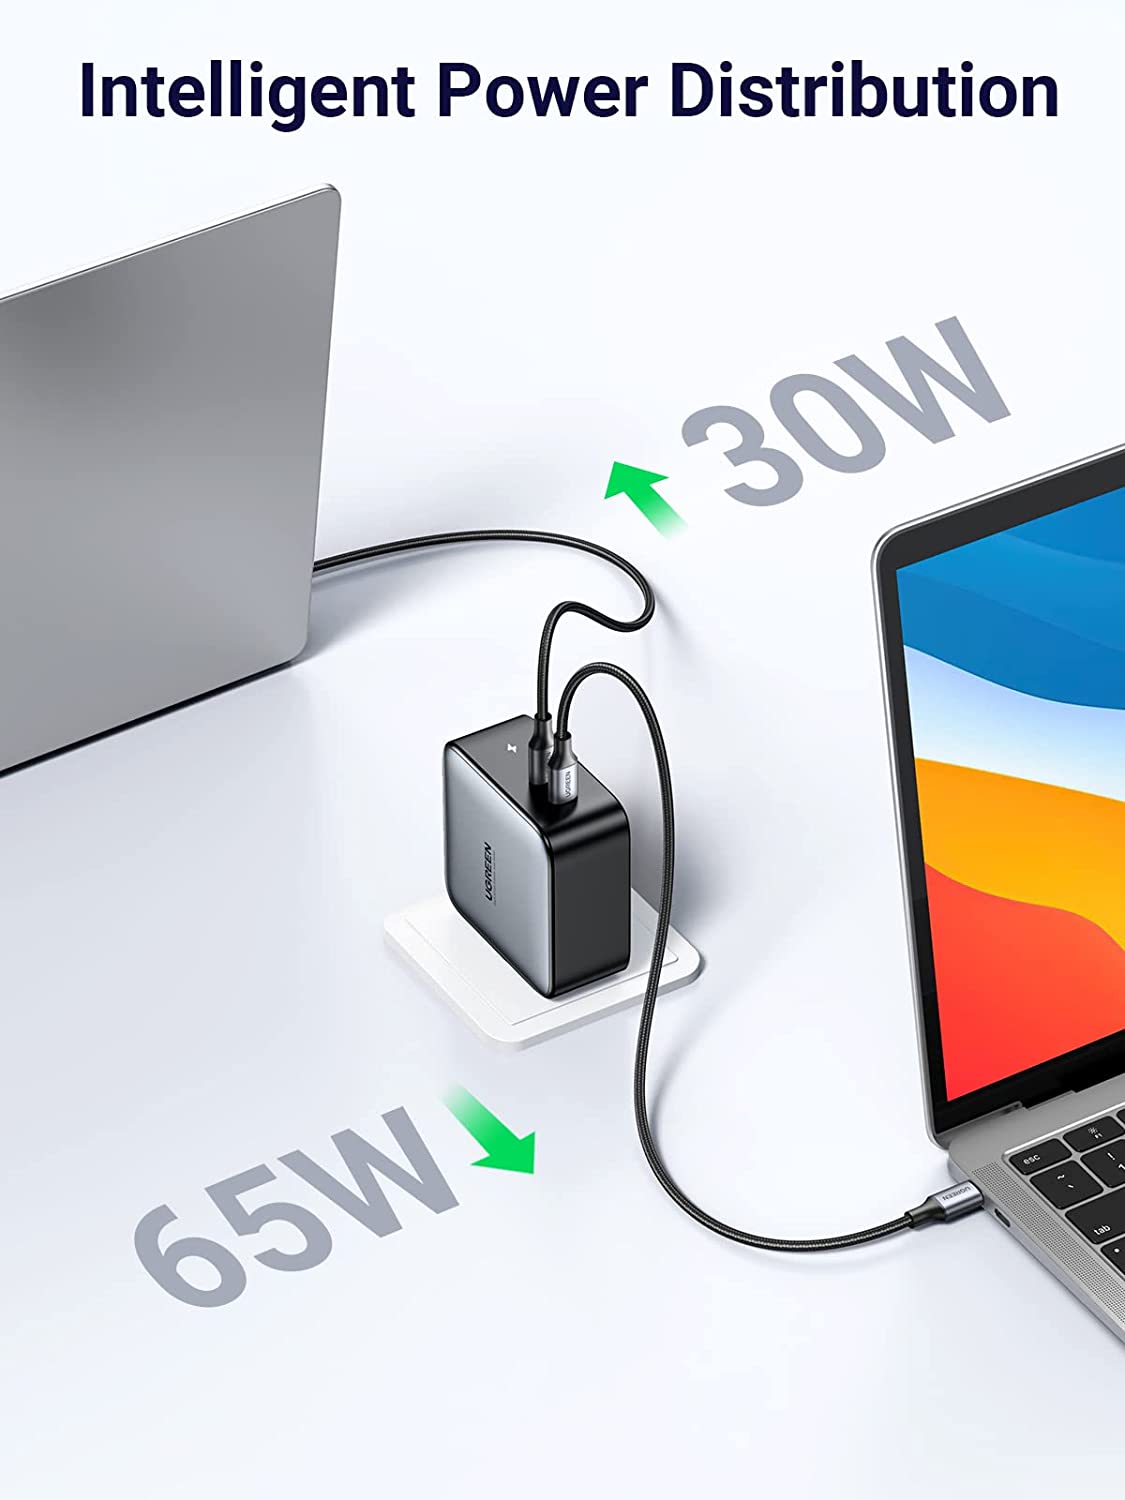 Chargeur rapide 100 W GAN d'UGREEN - 2x USB-C